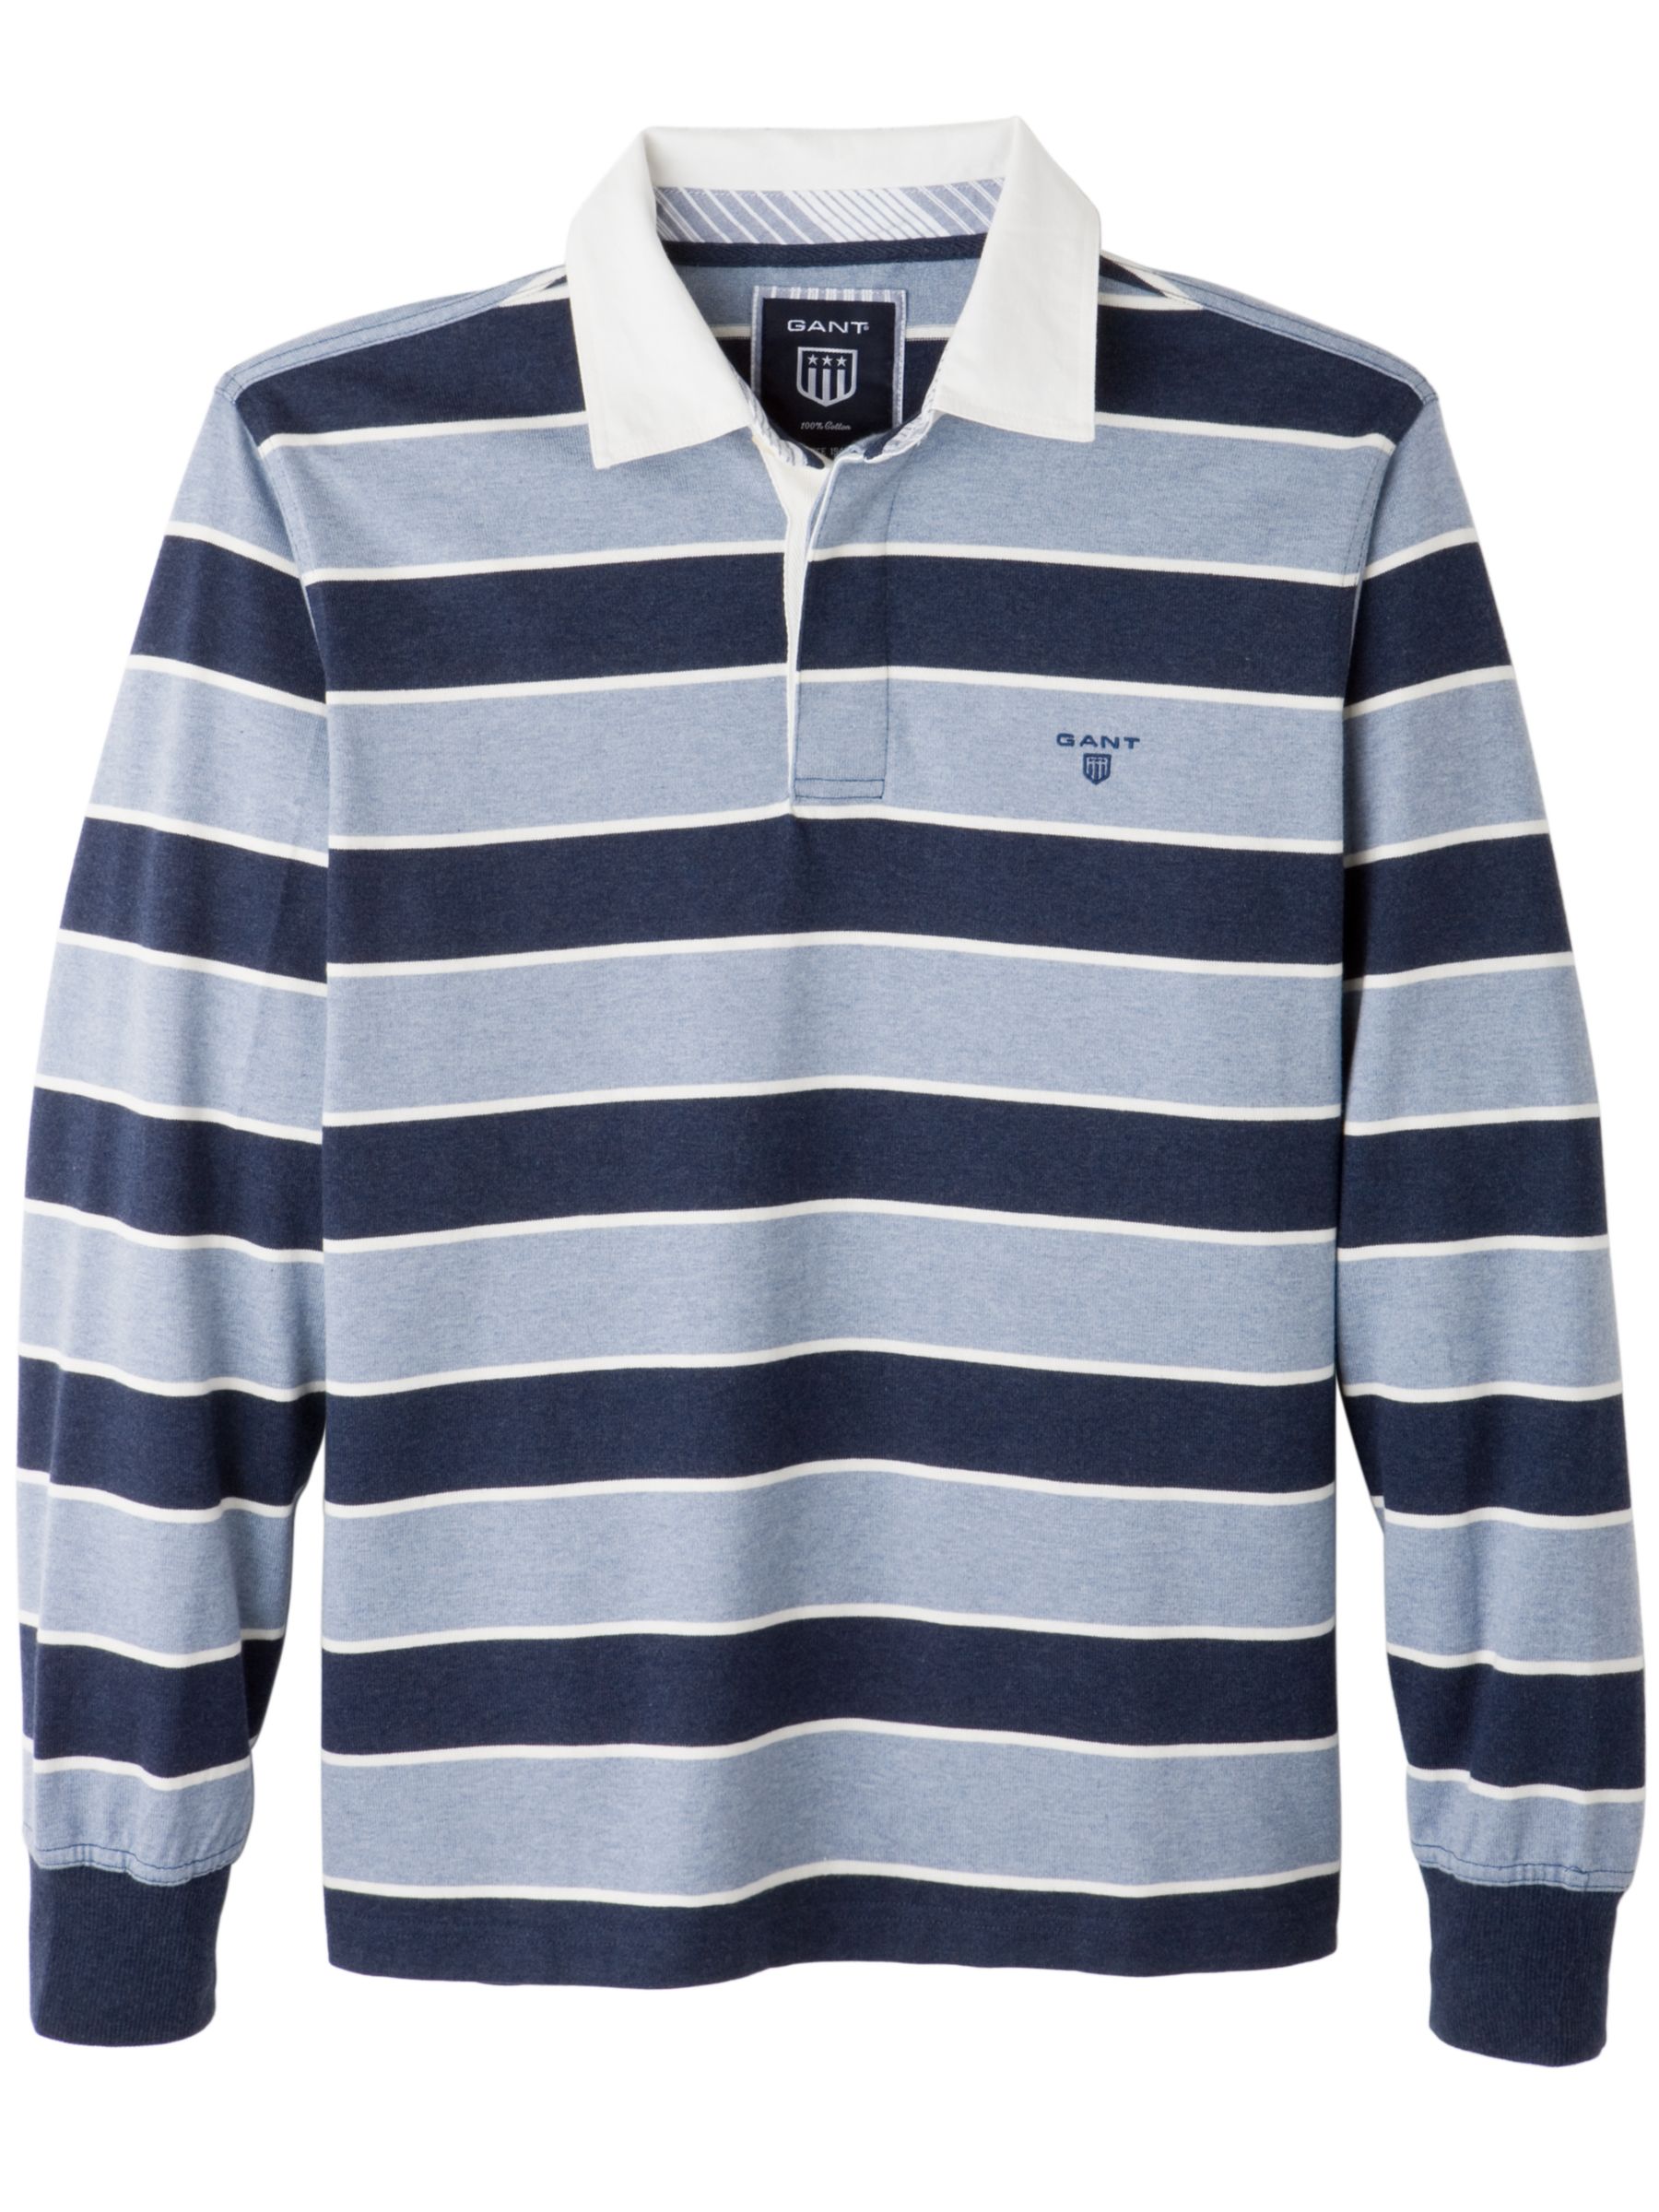 Gant Stripe Cotton Rugby Shirt, Blue, XL